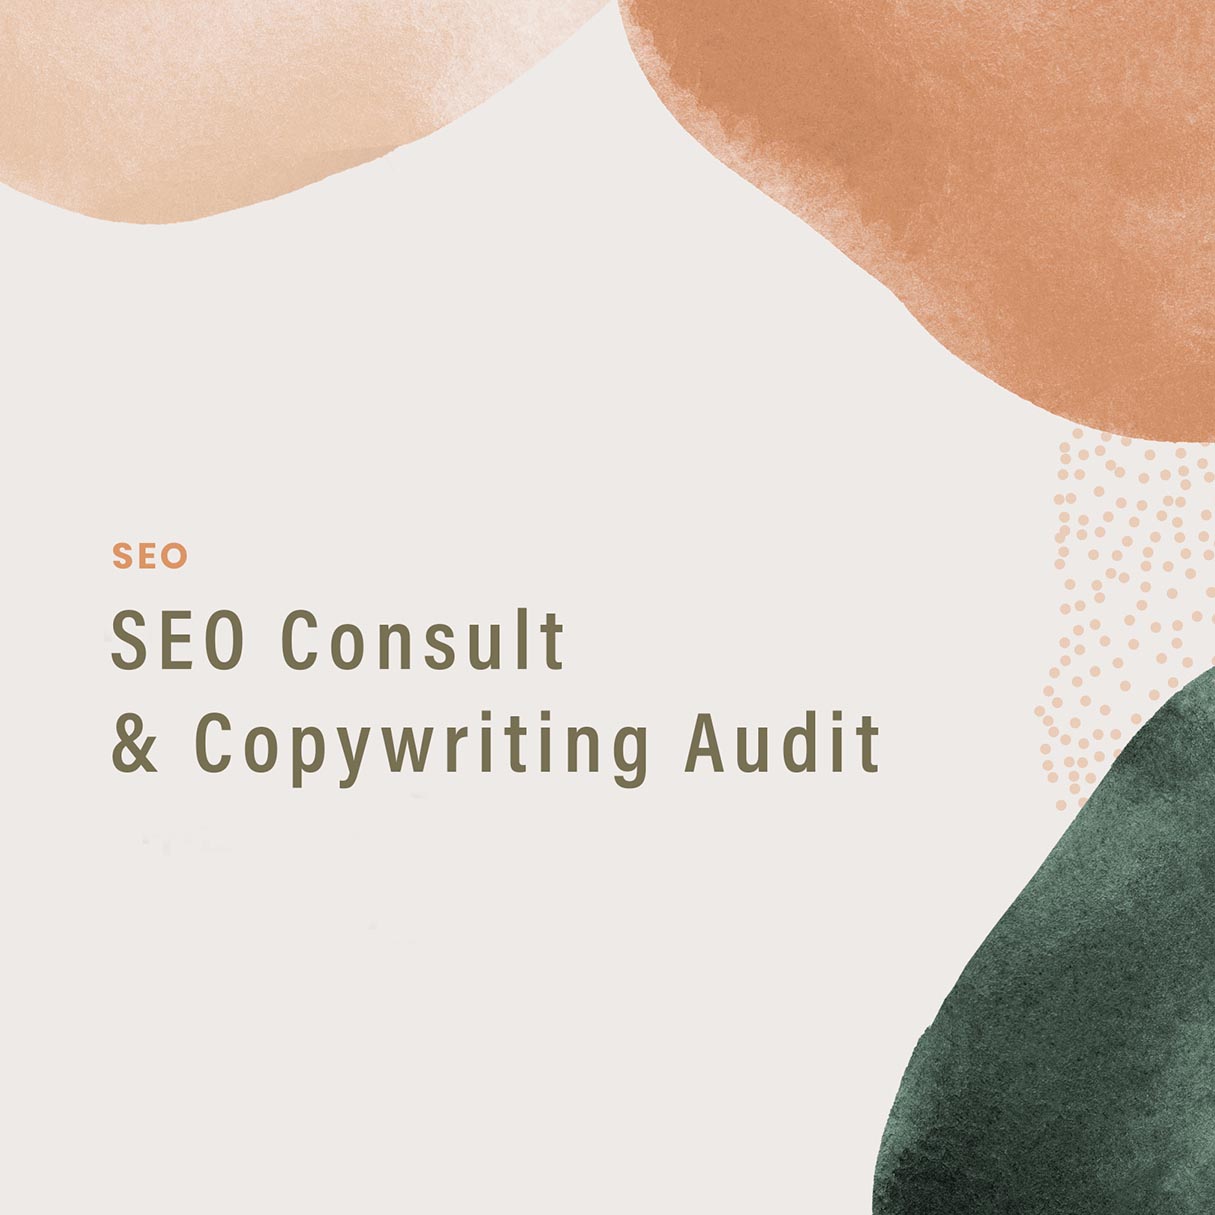 seo consult copywriting audit